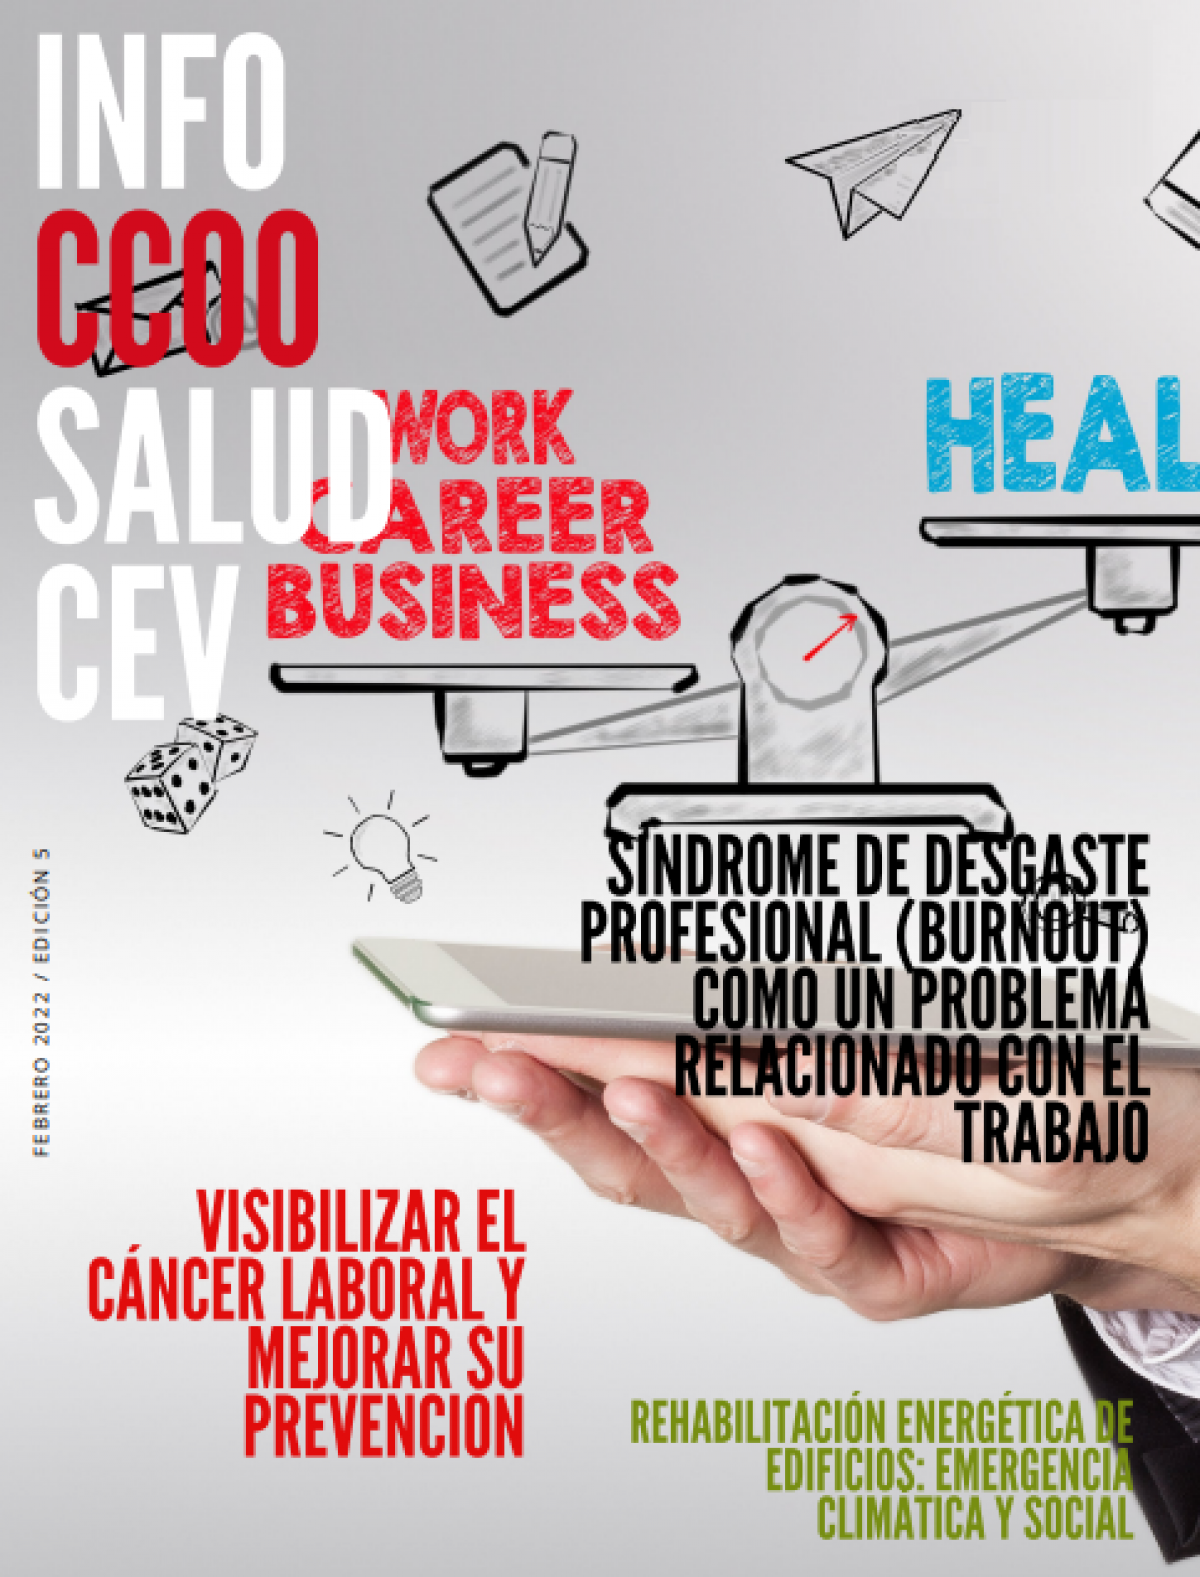 Info CCOO Salud CEV nº5